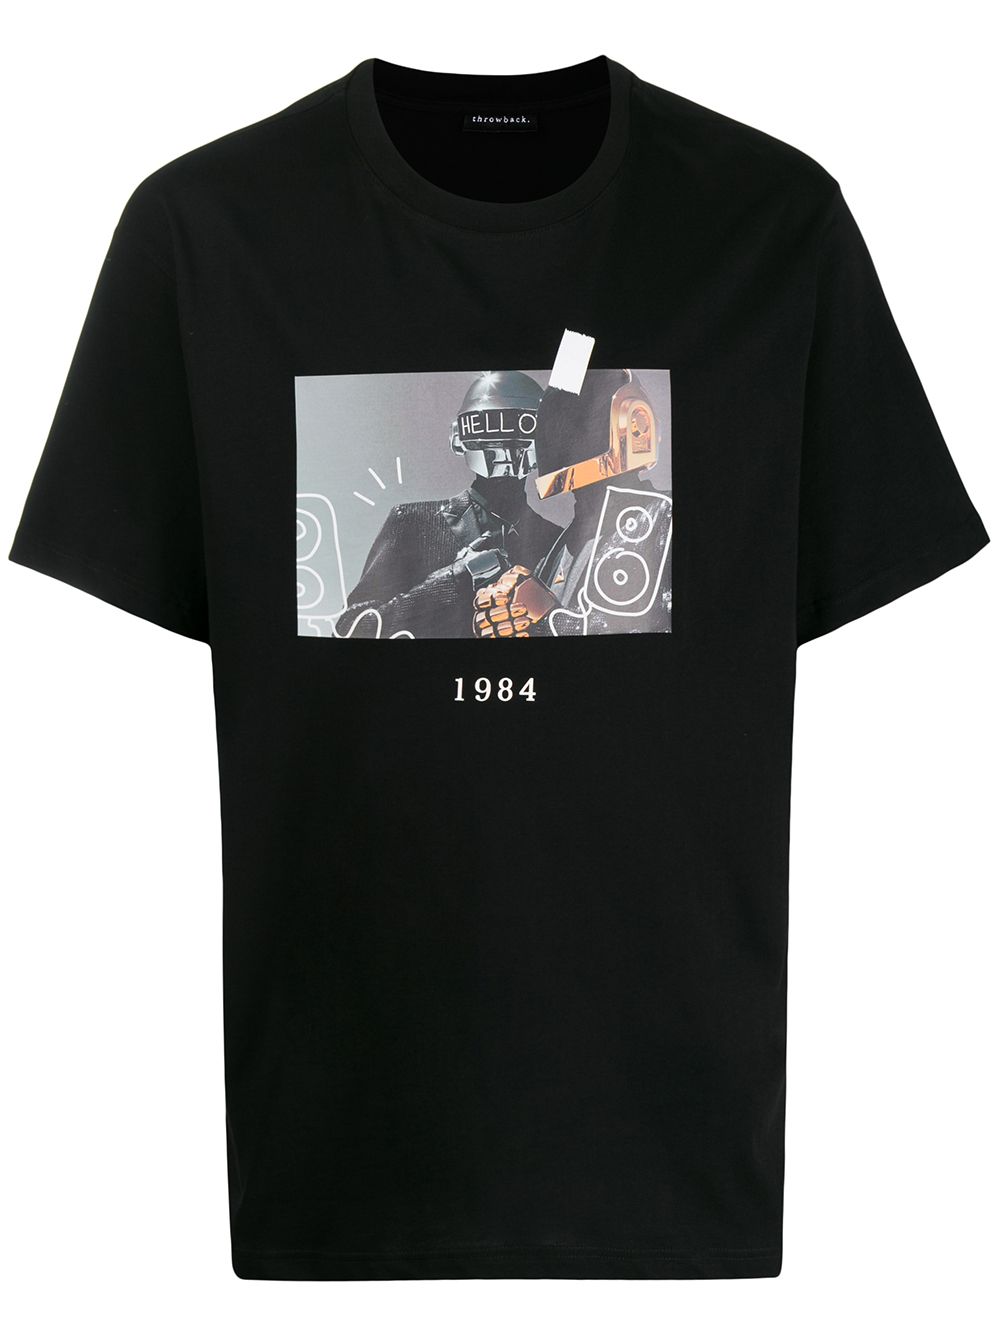 Throwback. Daft Punk print T-shirt - Black